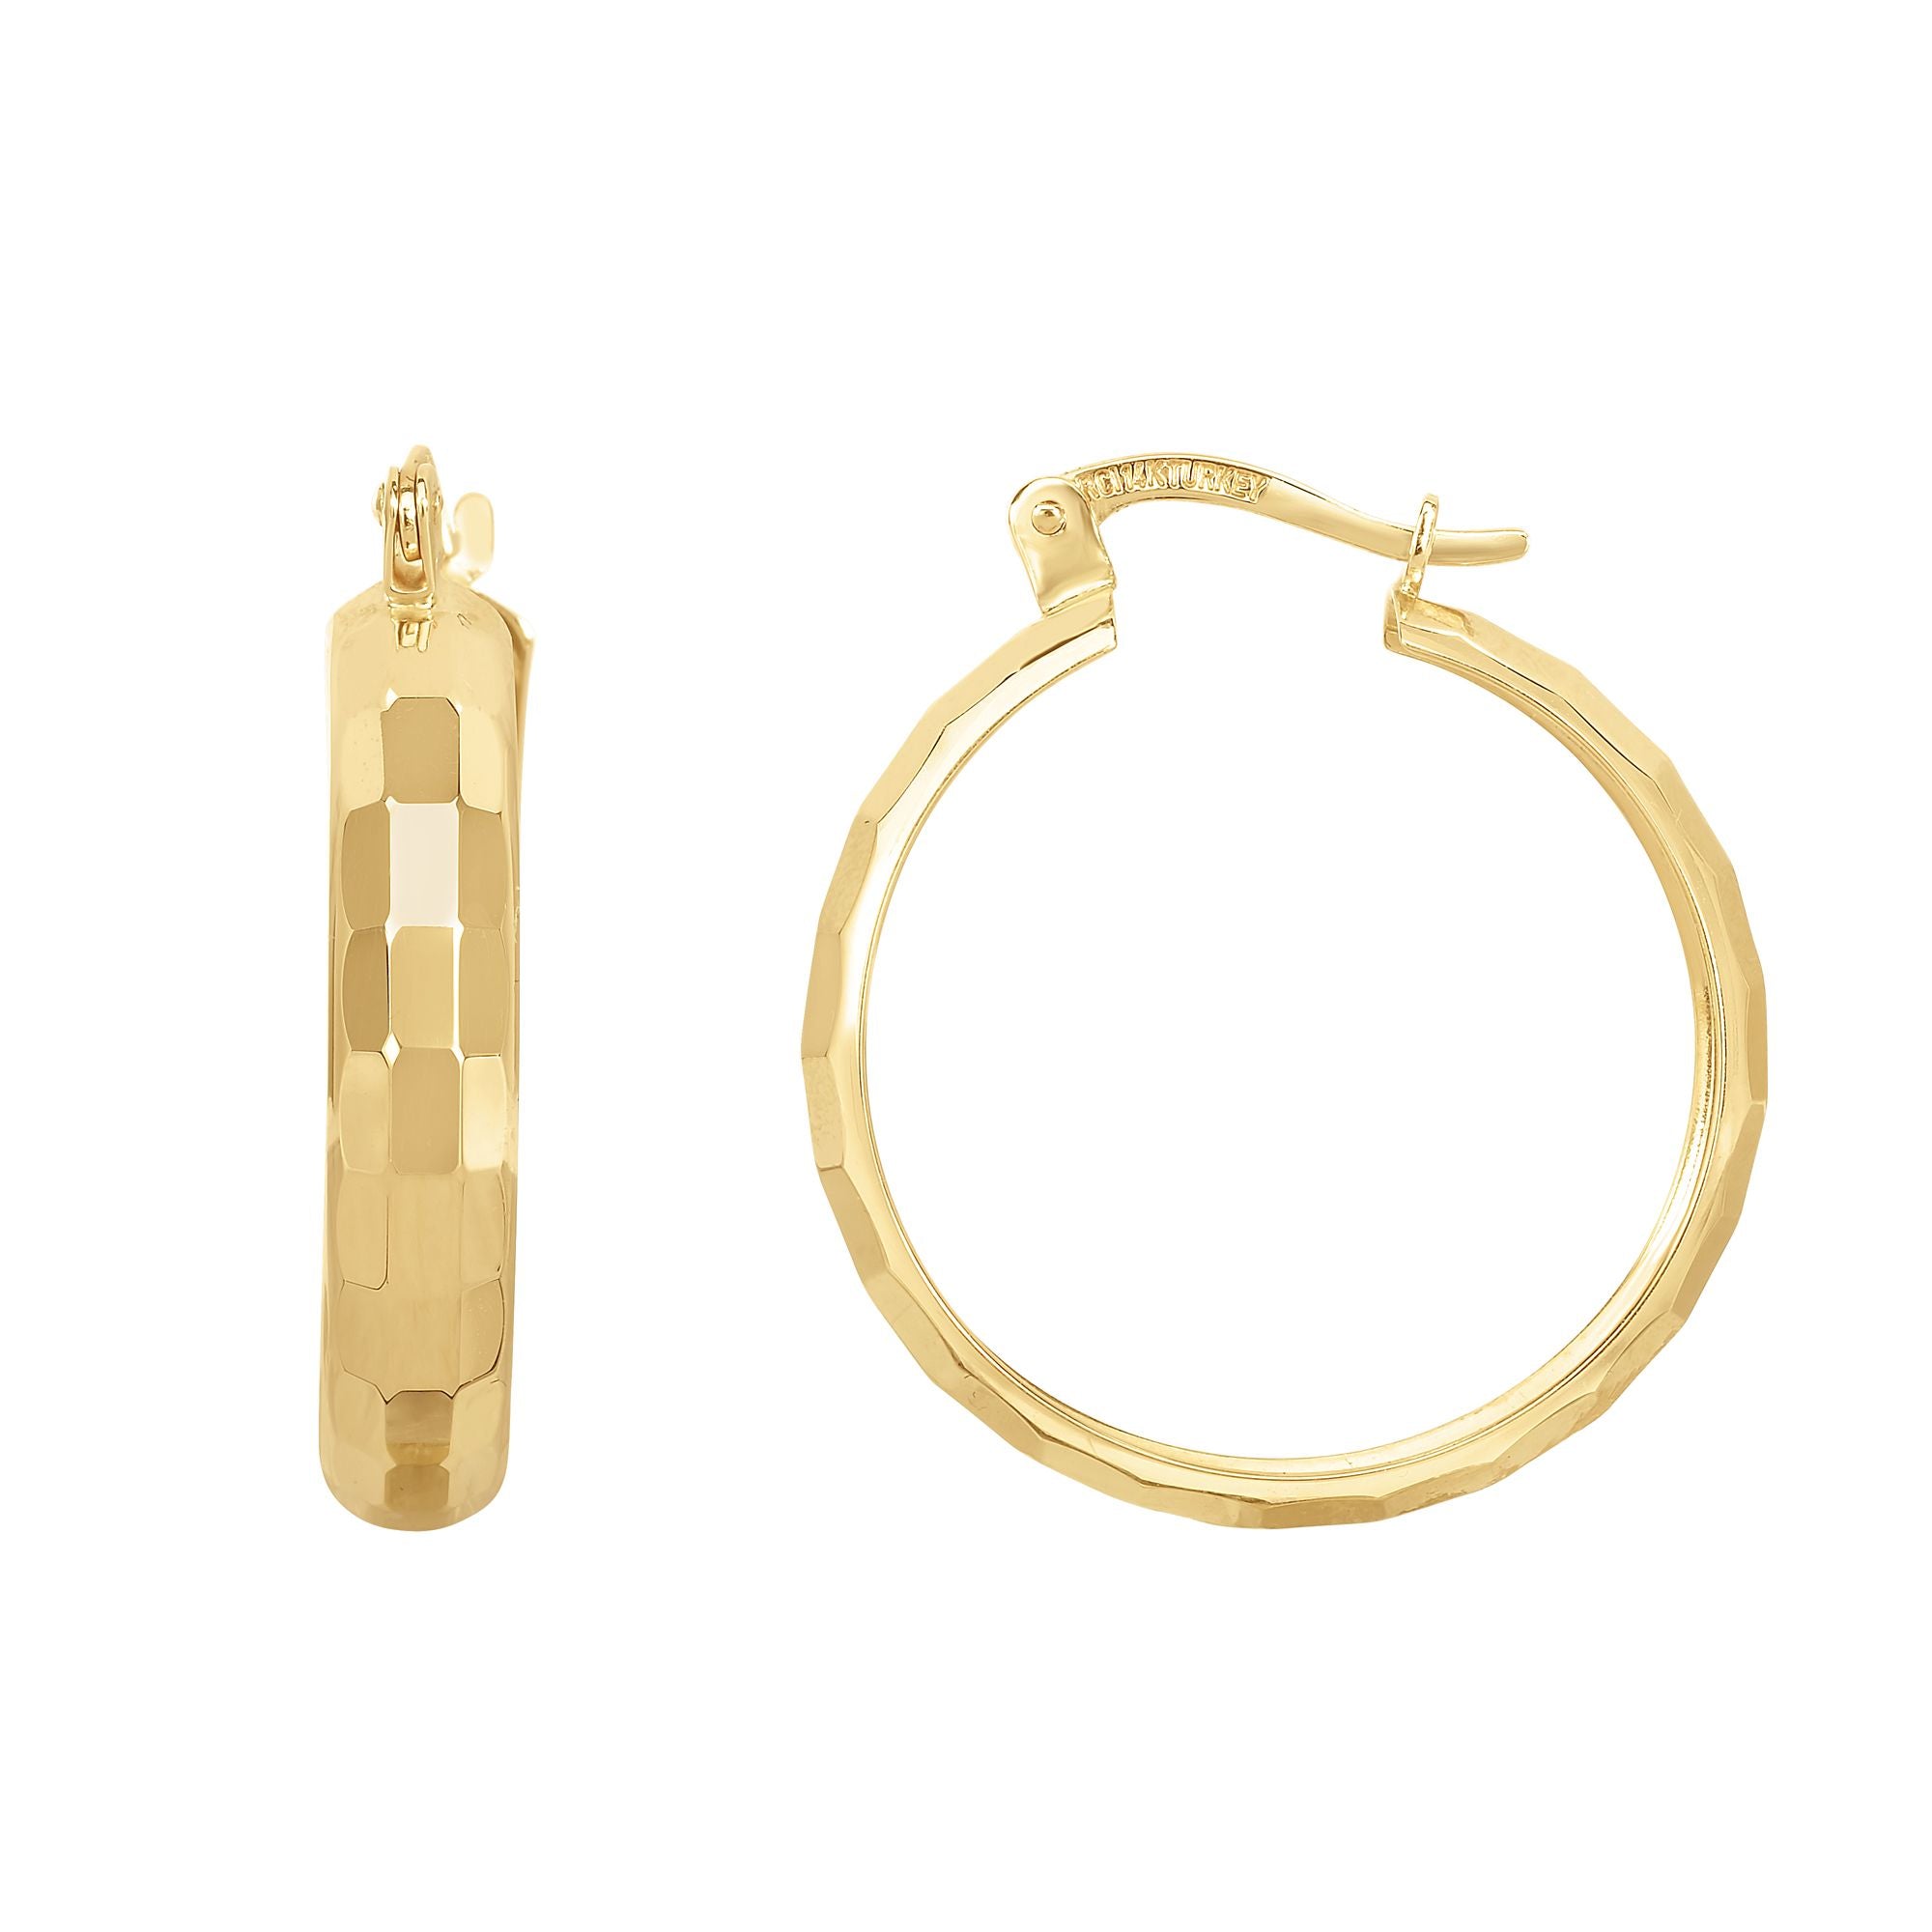 14K Gold Reflective Rectangular Hoop Earrings, Diameter 22mm fine designer jewelry for men and women